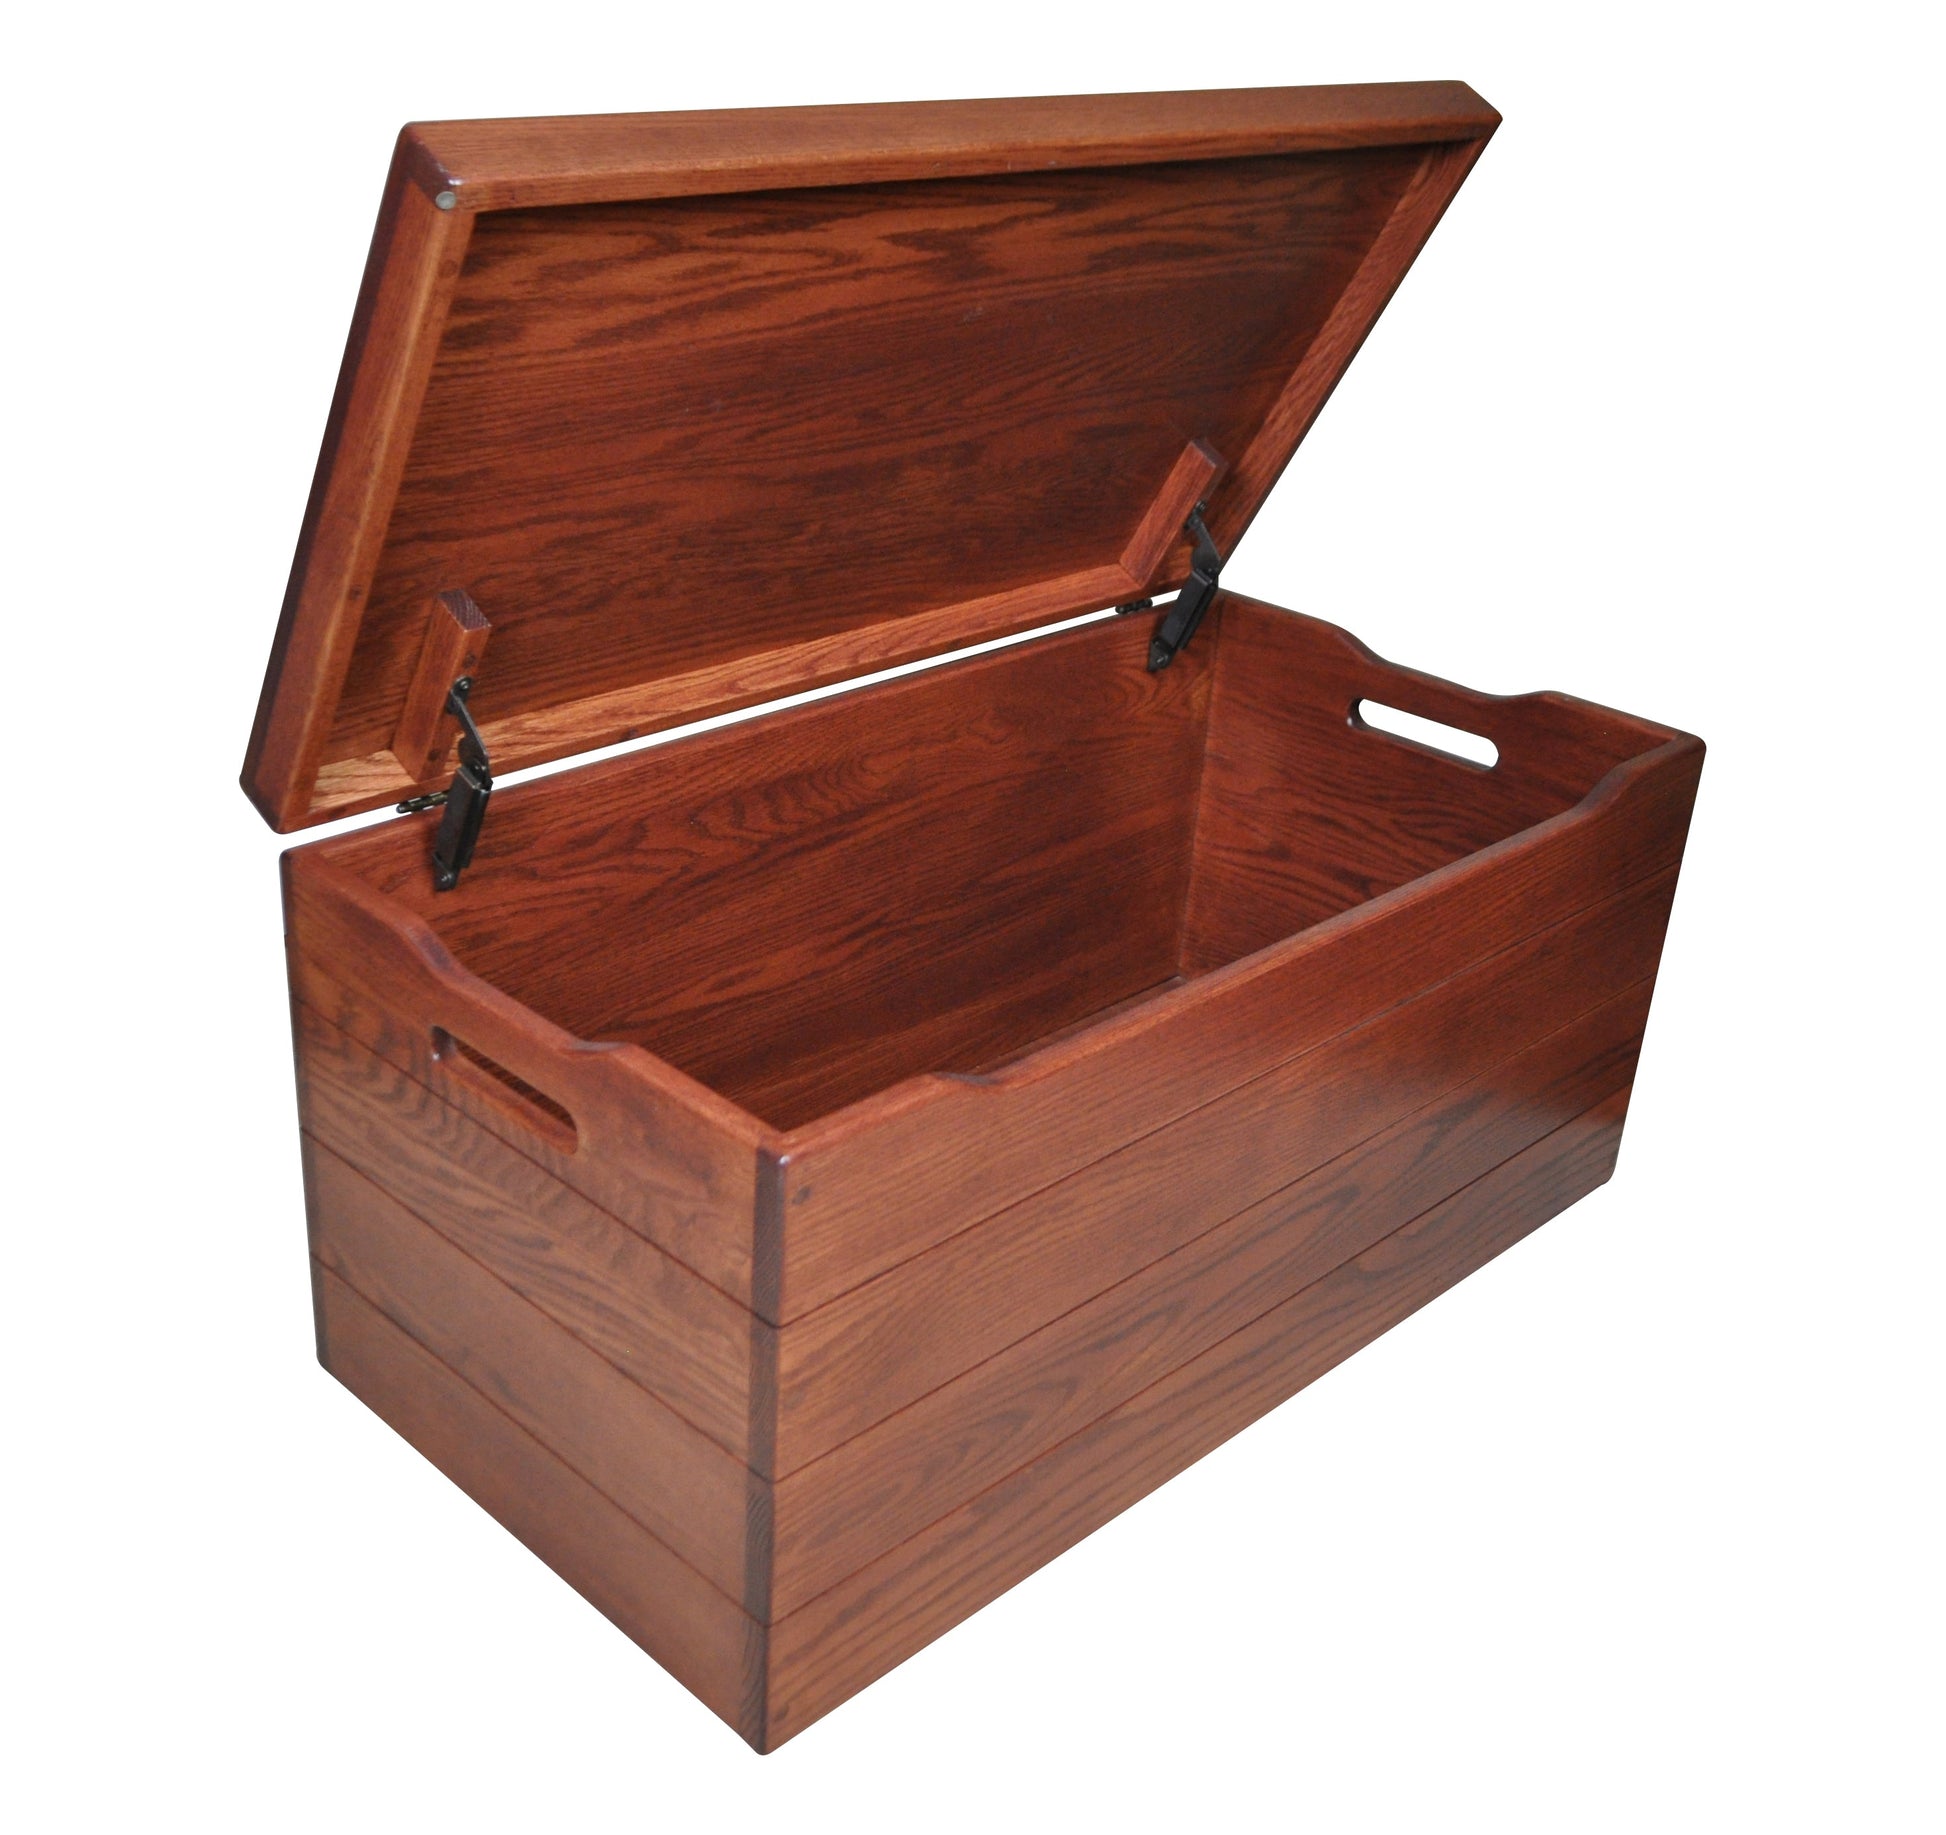 Open Oak Storage chest, Washington cherry stain